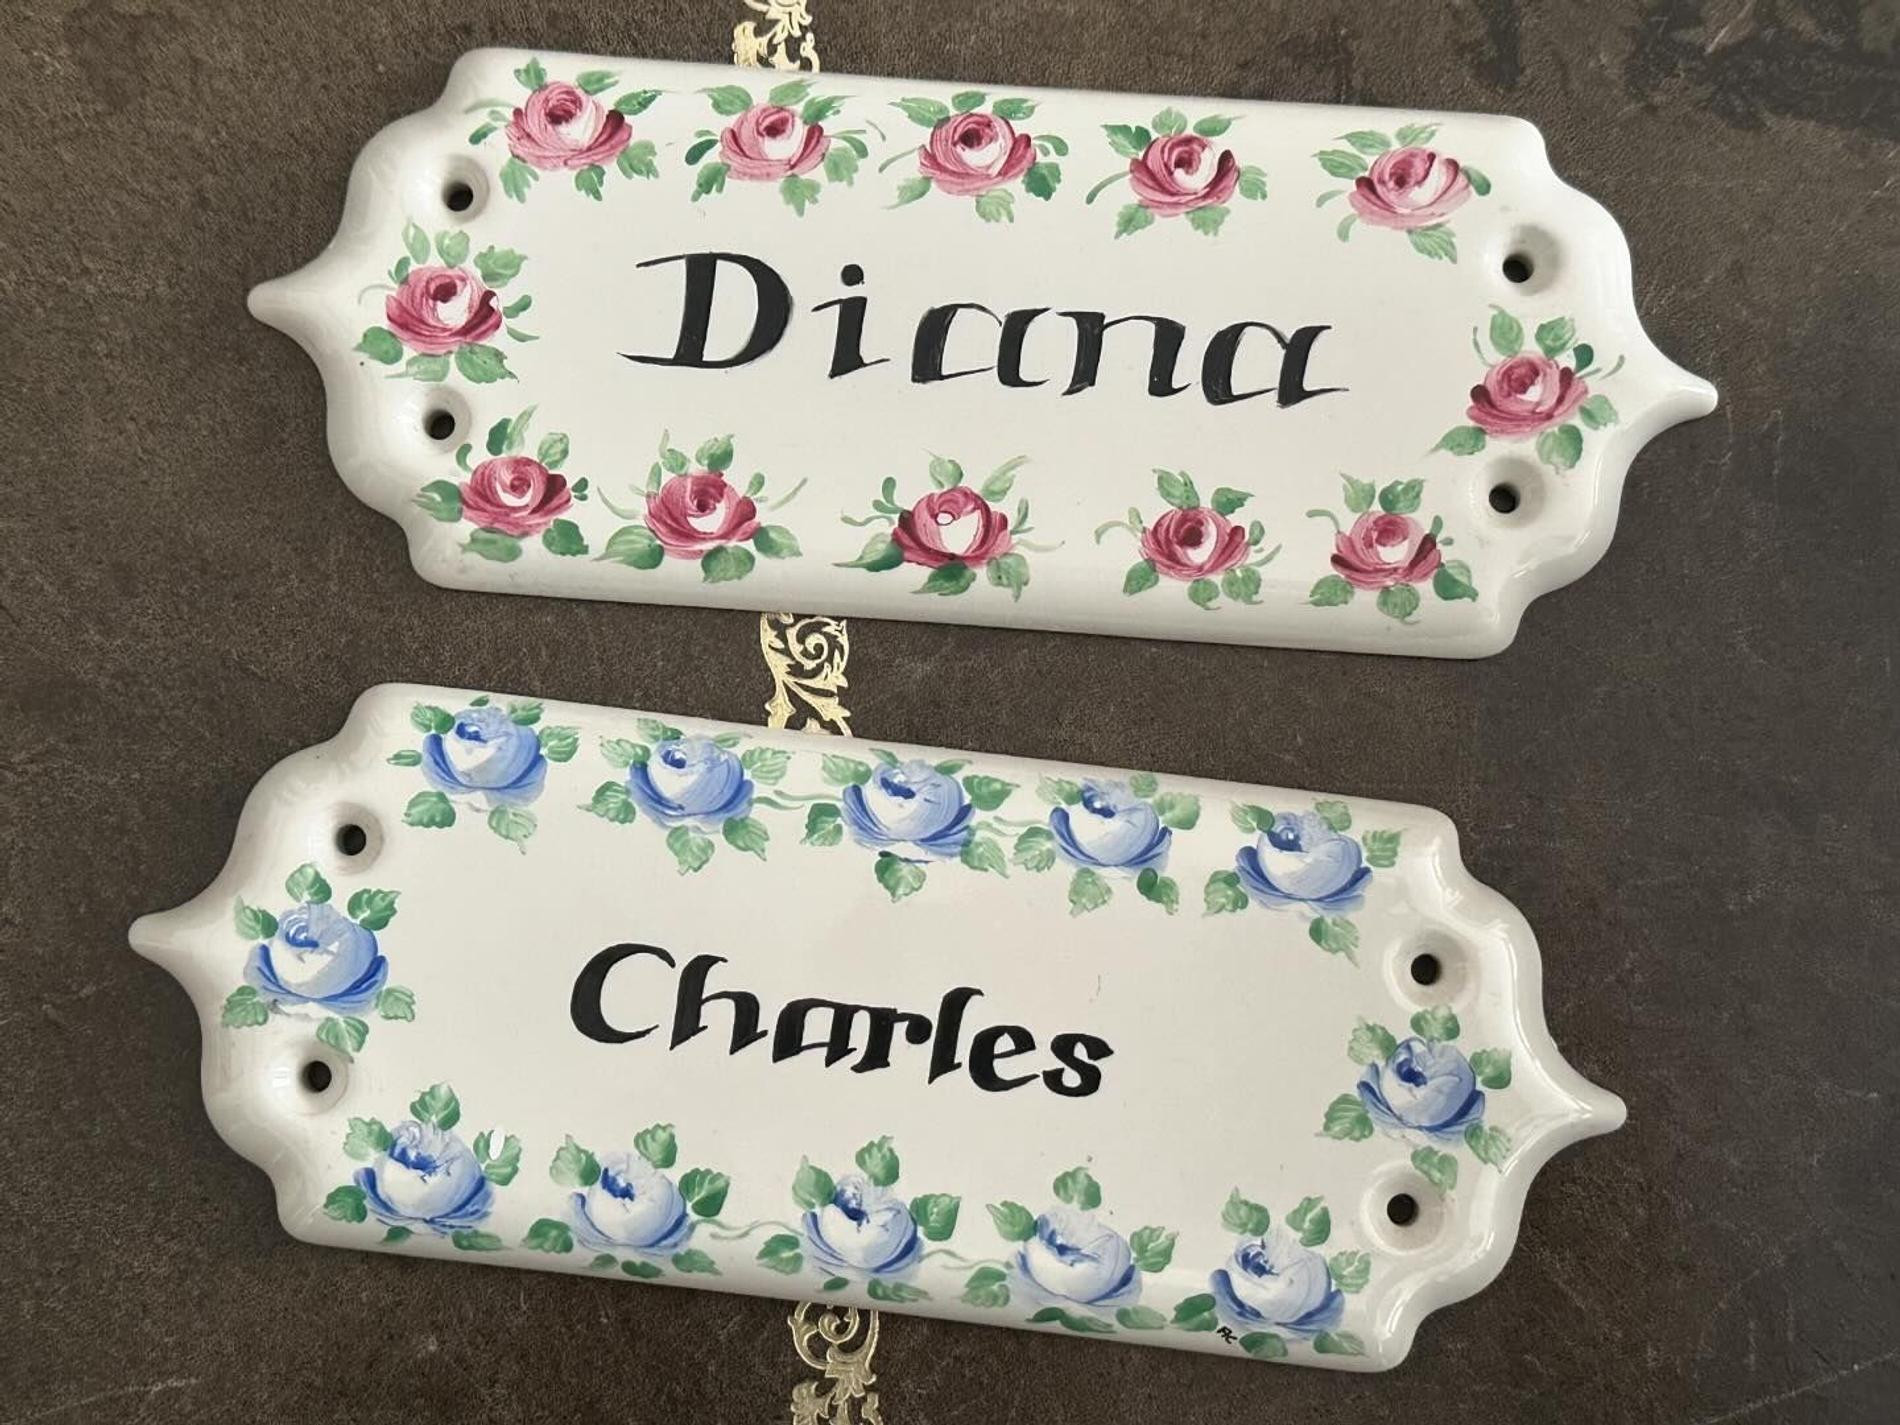 Таблички с именами Дианы и Чарльза. Фото: Инстаграм* @charles.earl.spencer